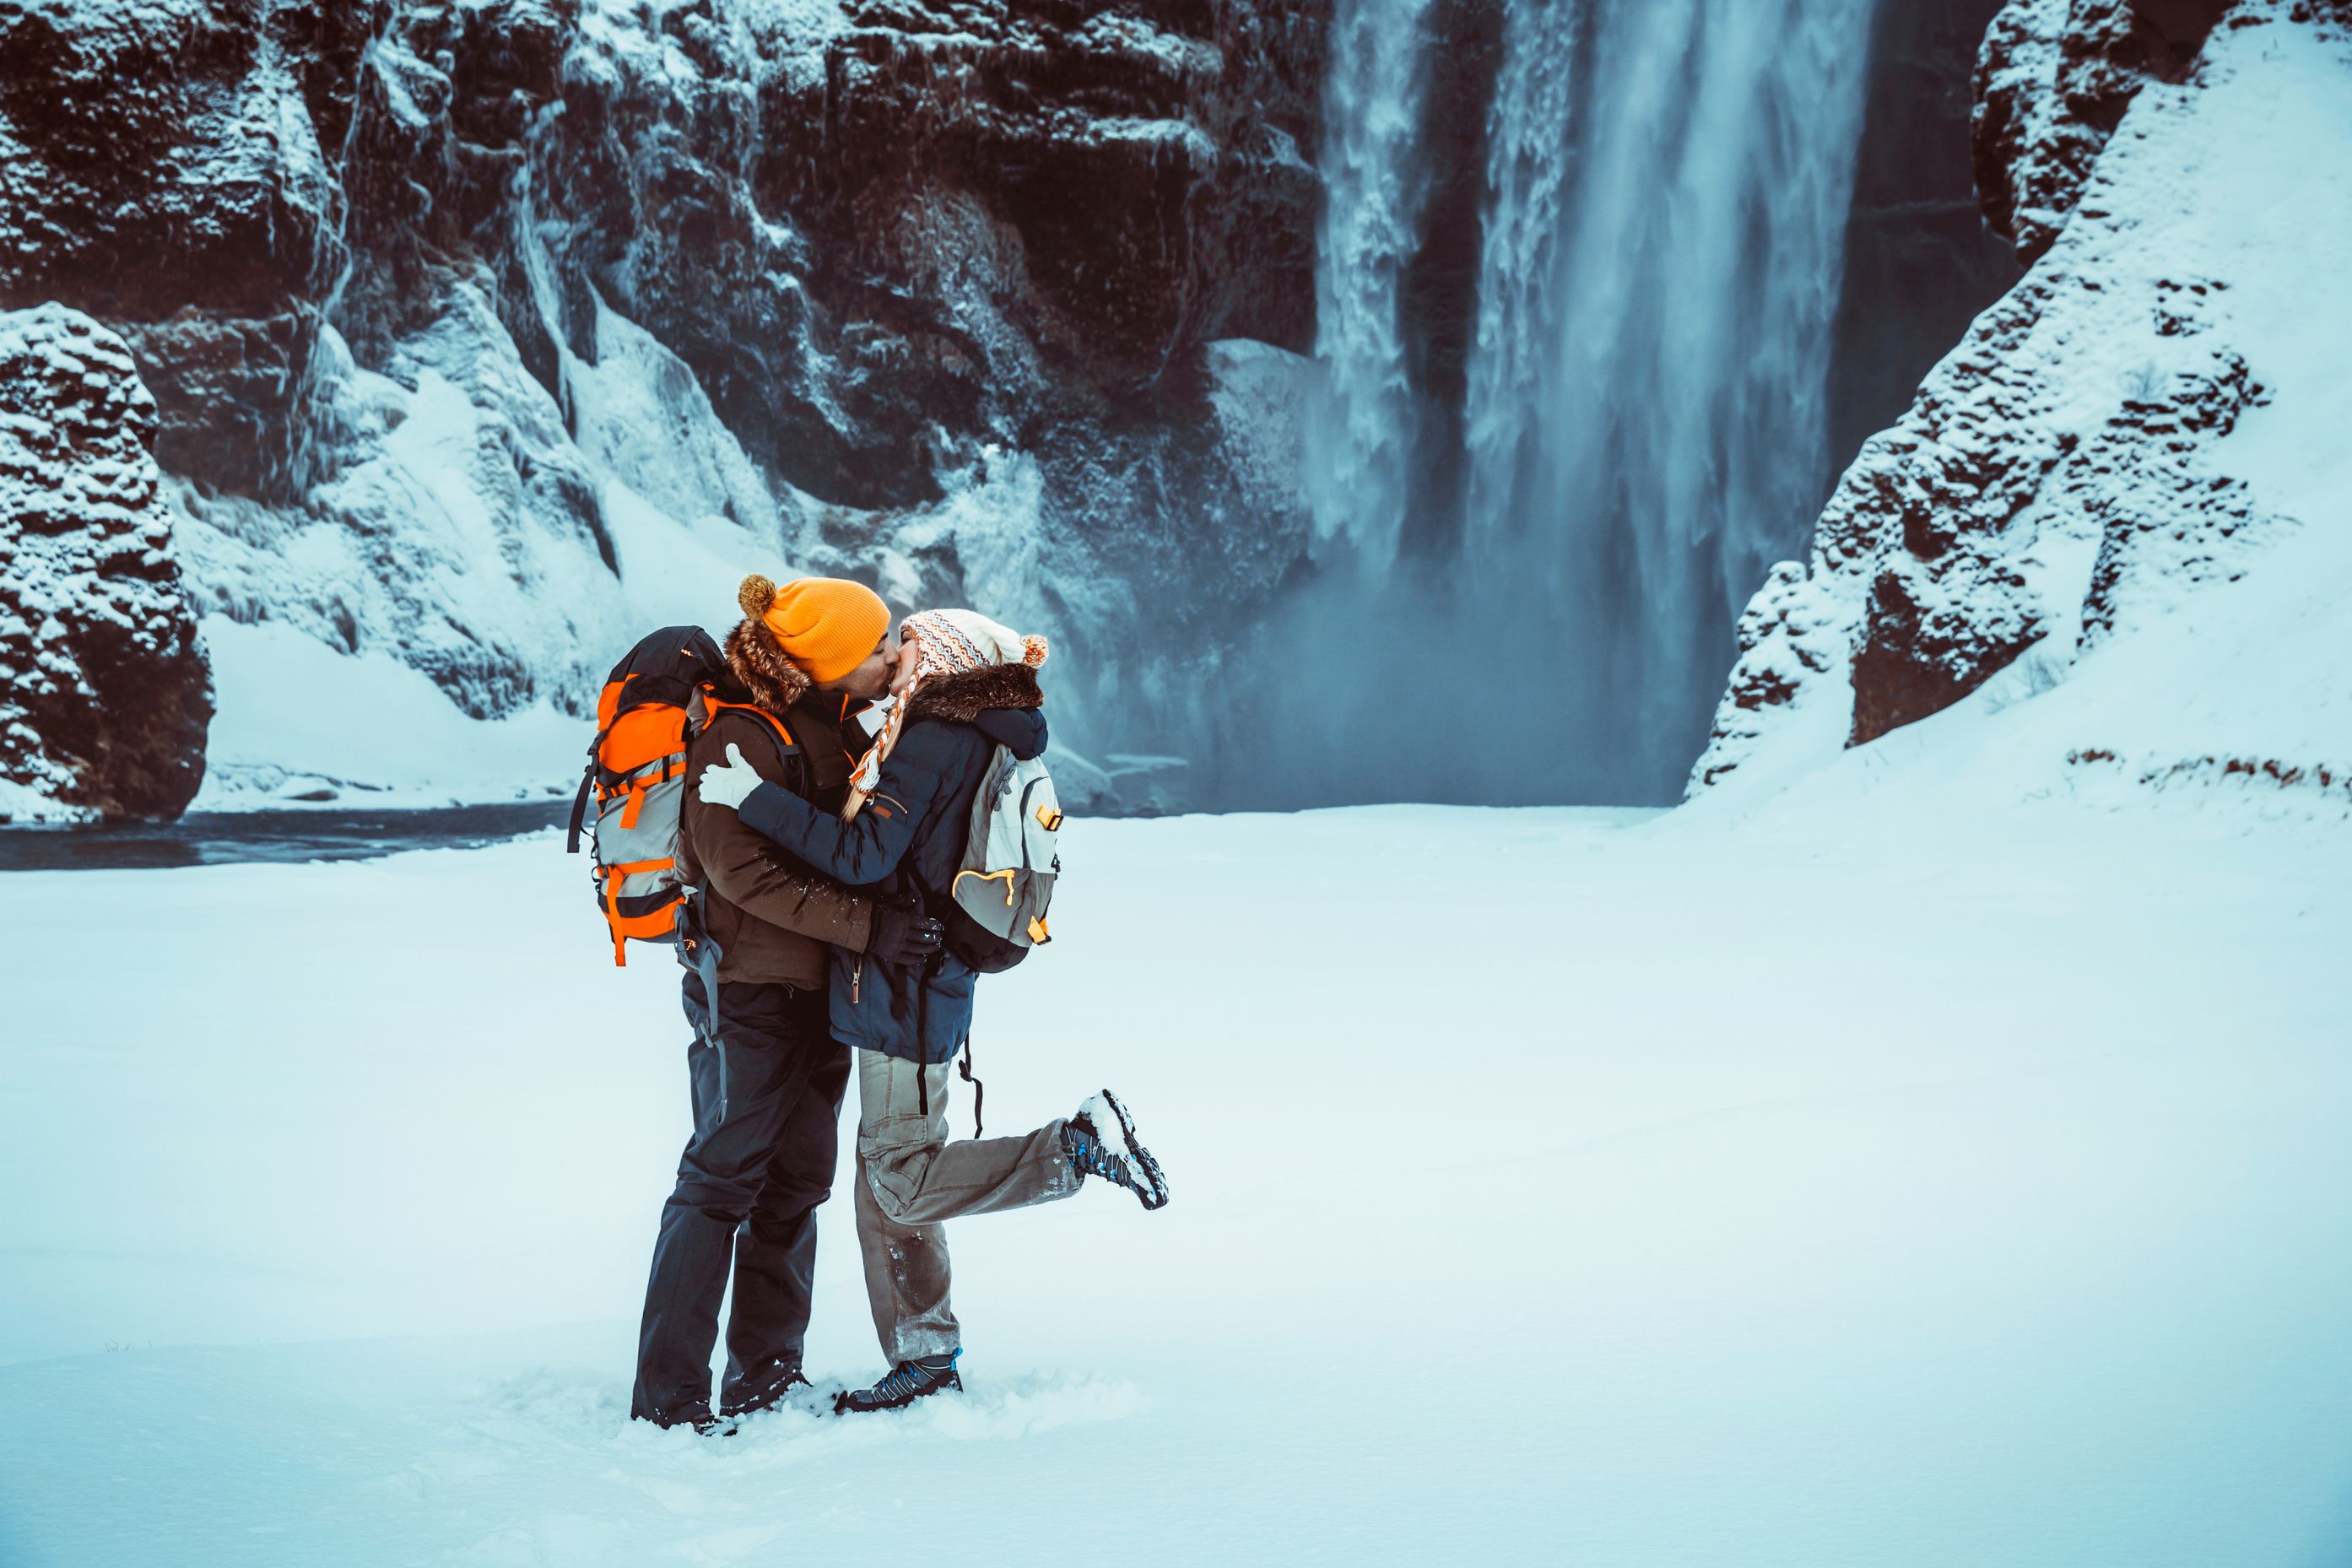 Honeymoon winter vacation in iceland